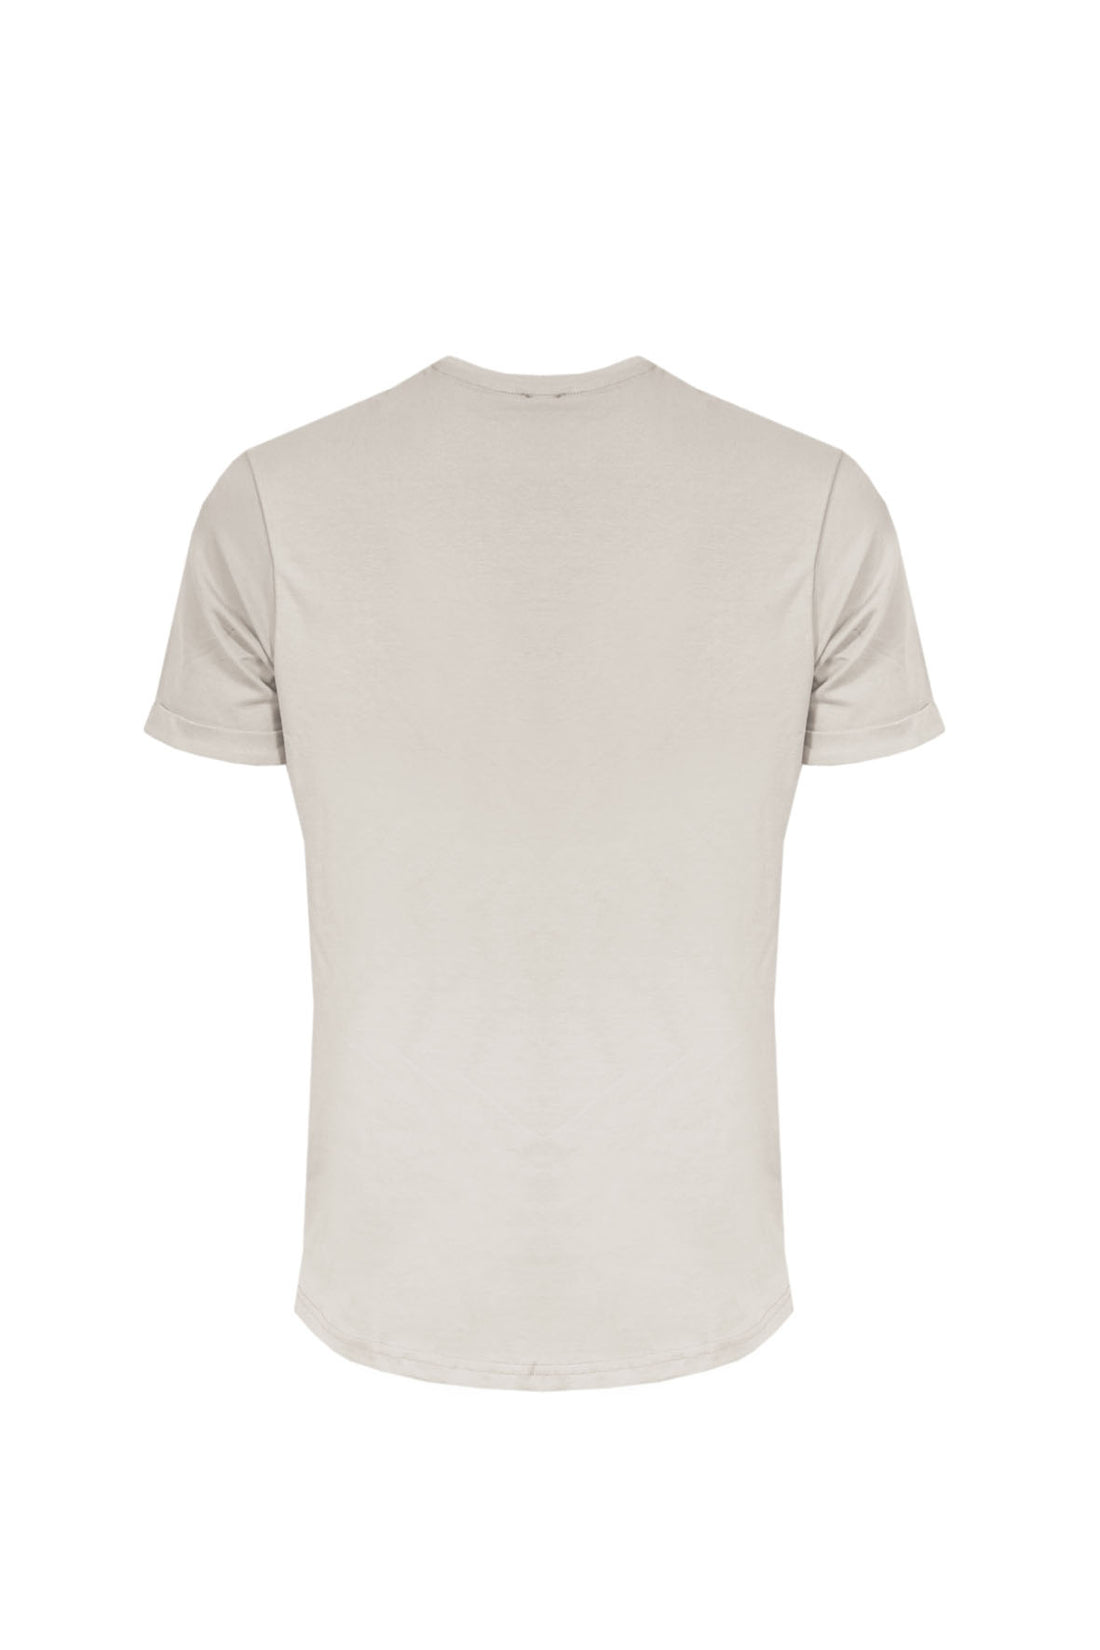 Double Fabric Round Neck T-Shirt - Beige